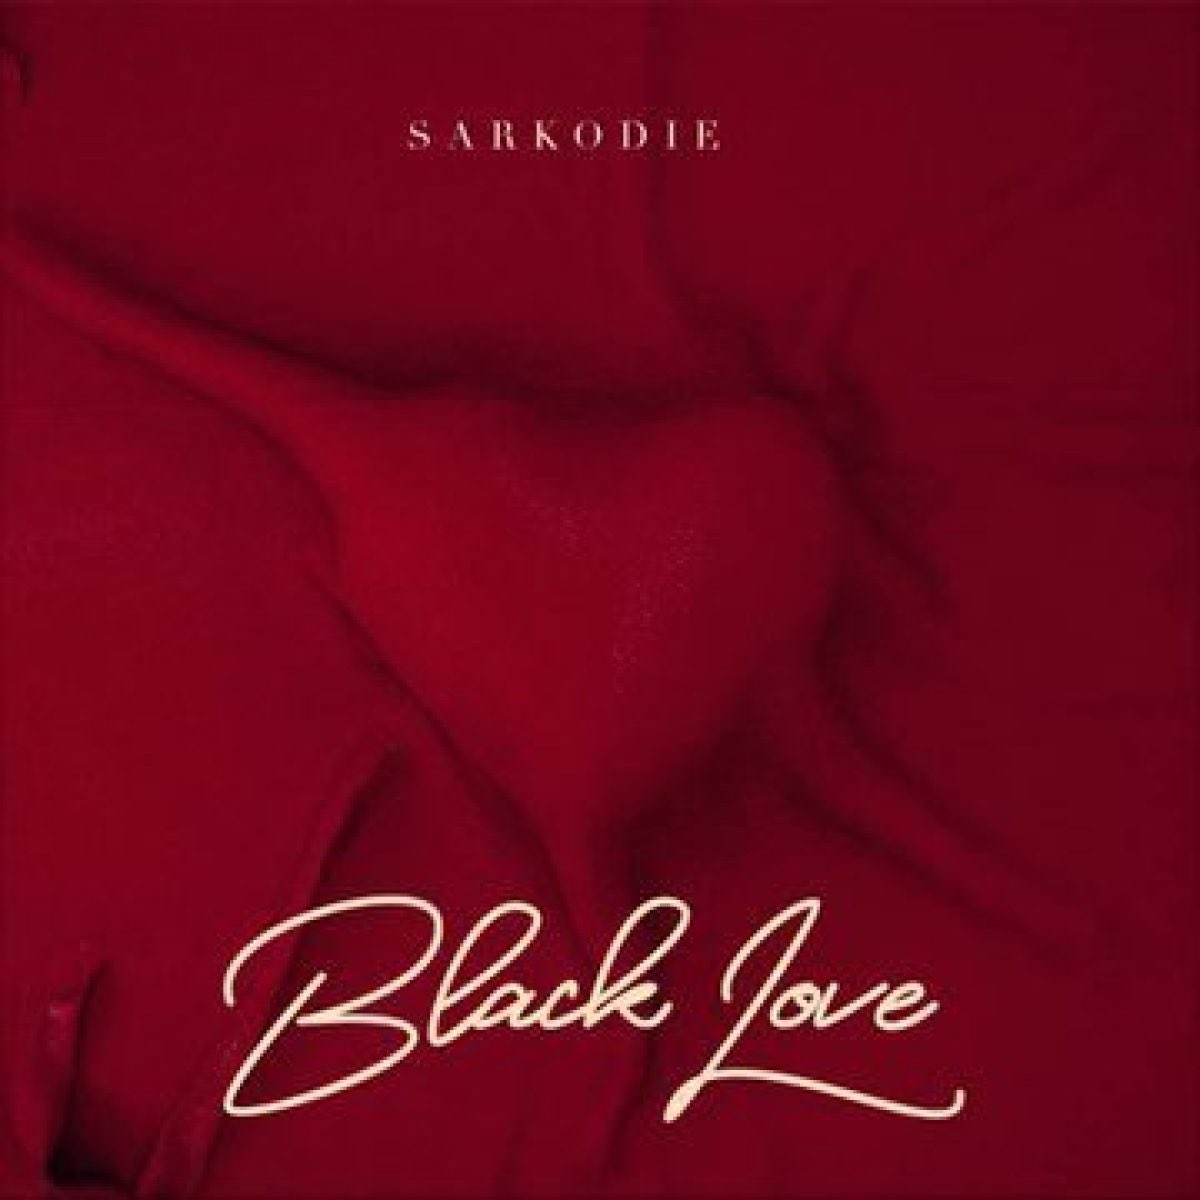 Your favorite Sarkodie album??